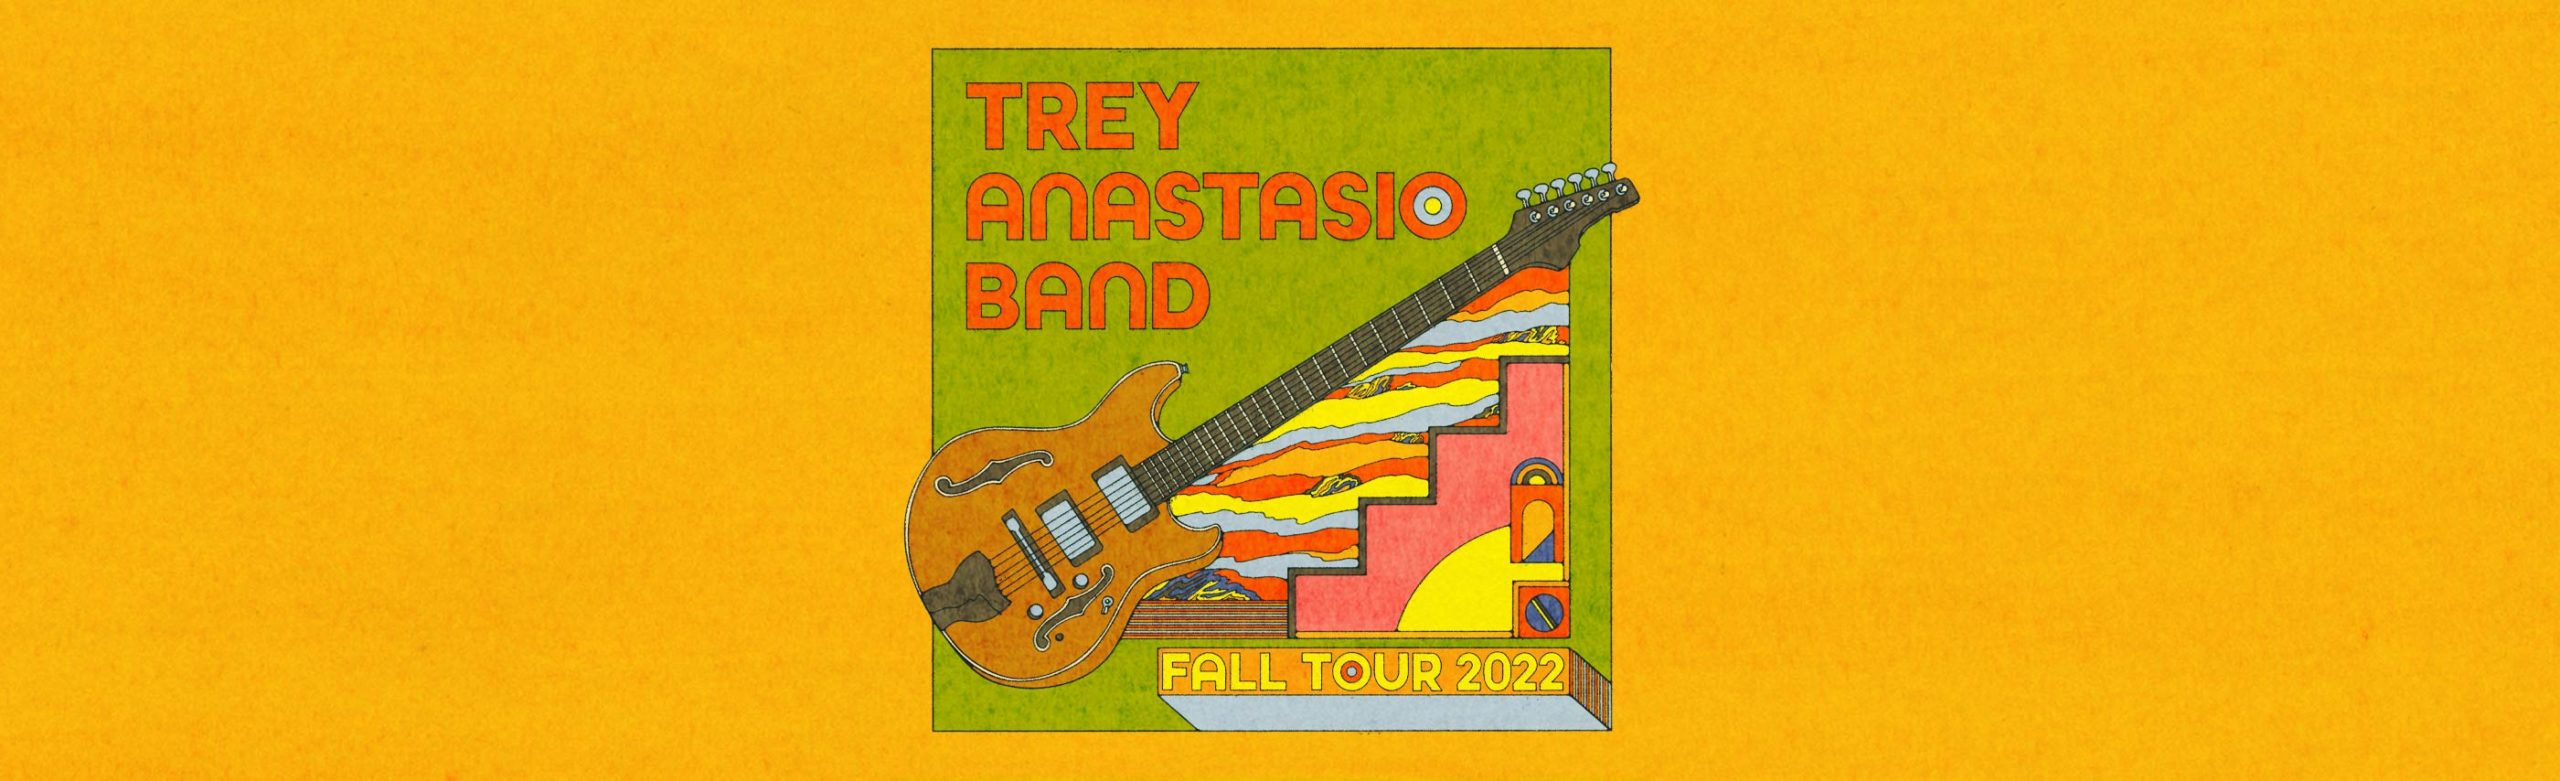 Event Info: Trey Anastasio Band at KettleHouse Amphitheater 2022 Image